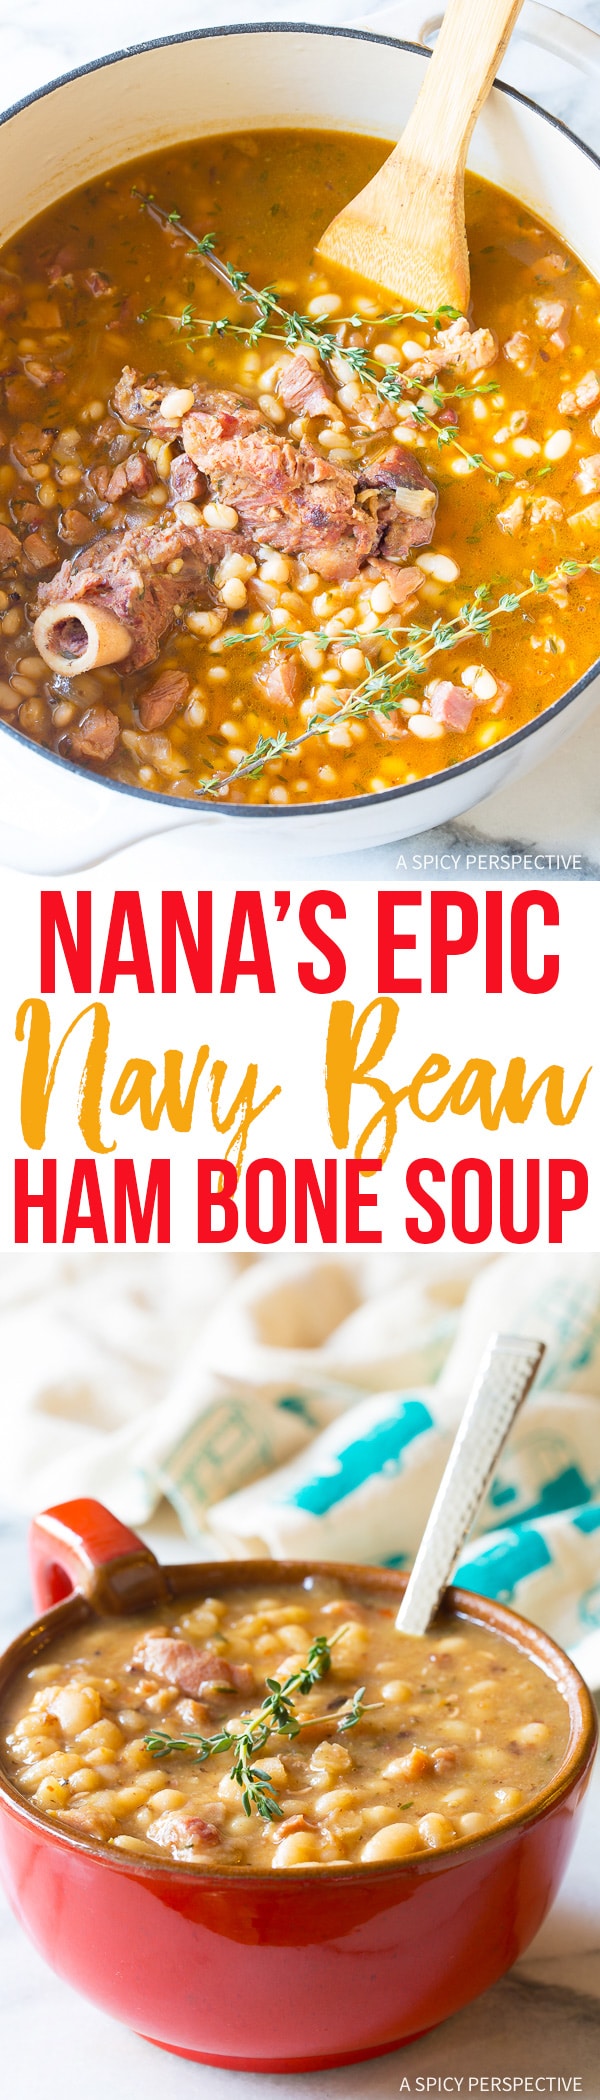 Nana's Epic Navy Bean Ham Bone Soup Recipe